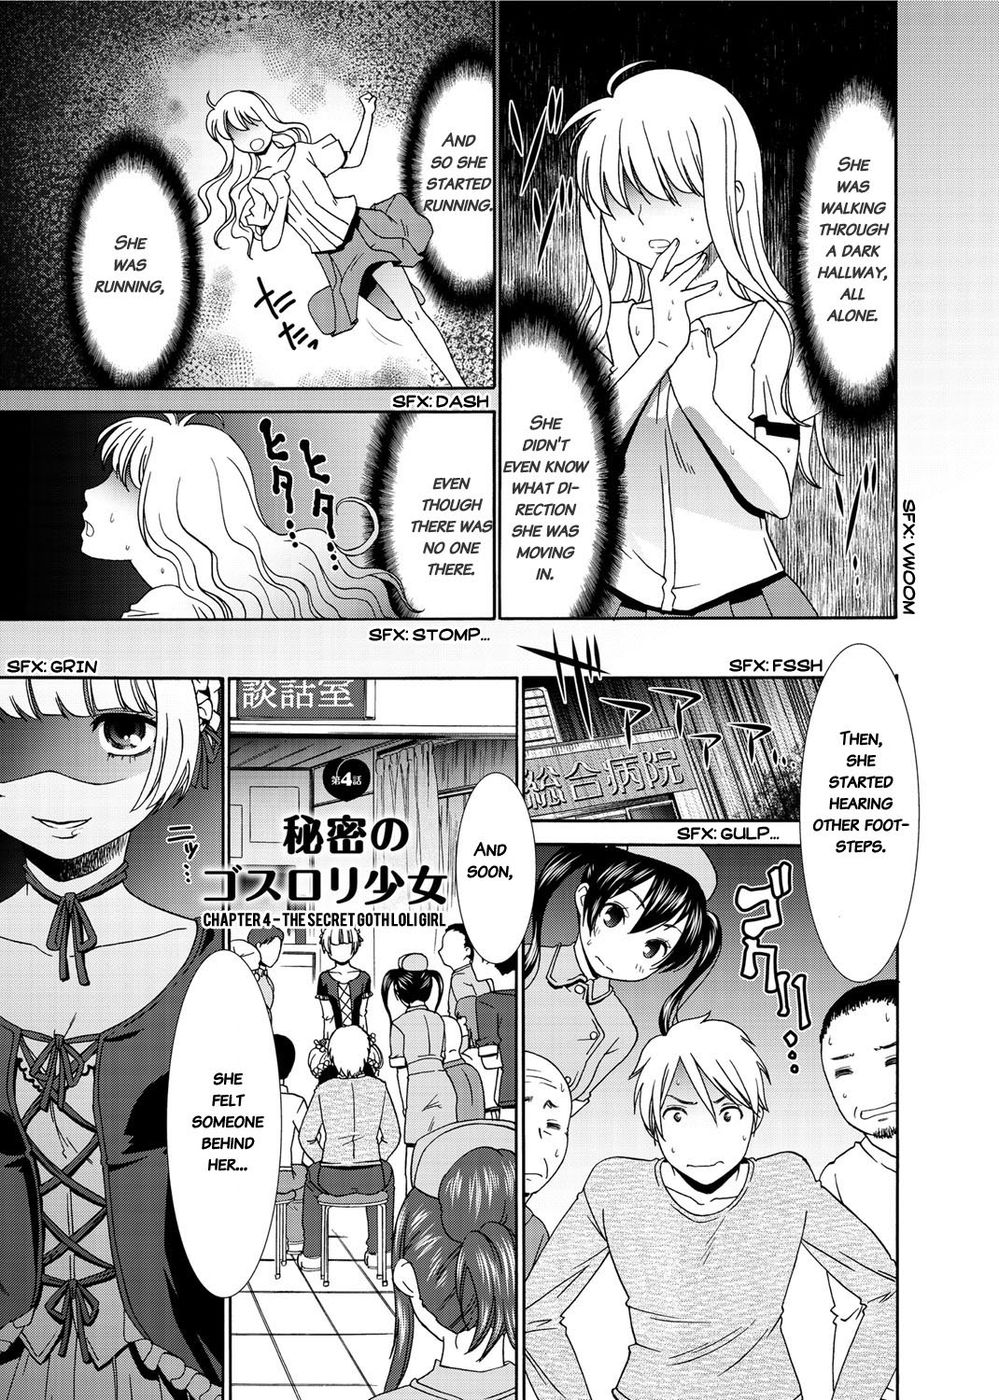 Hentai Manga Comic-Momoiro Nurse-Chapter 4 - The secret gothloligirl-1